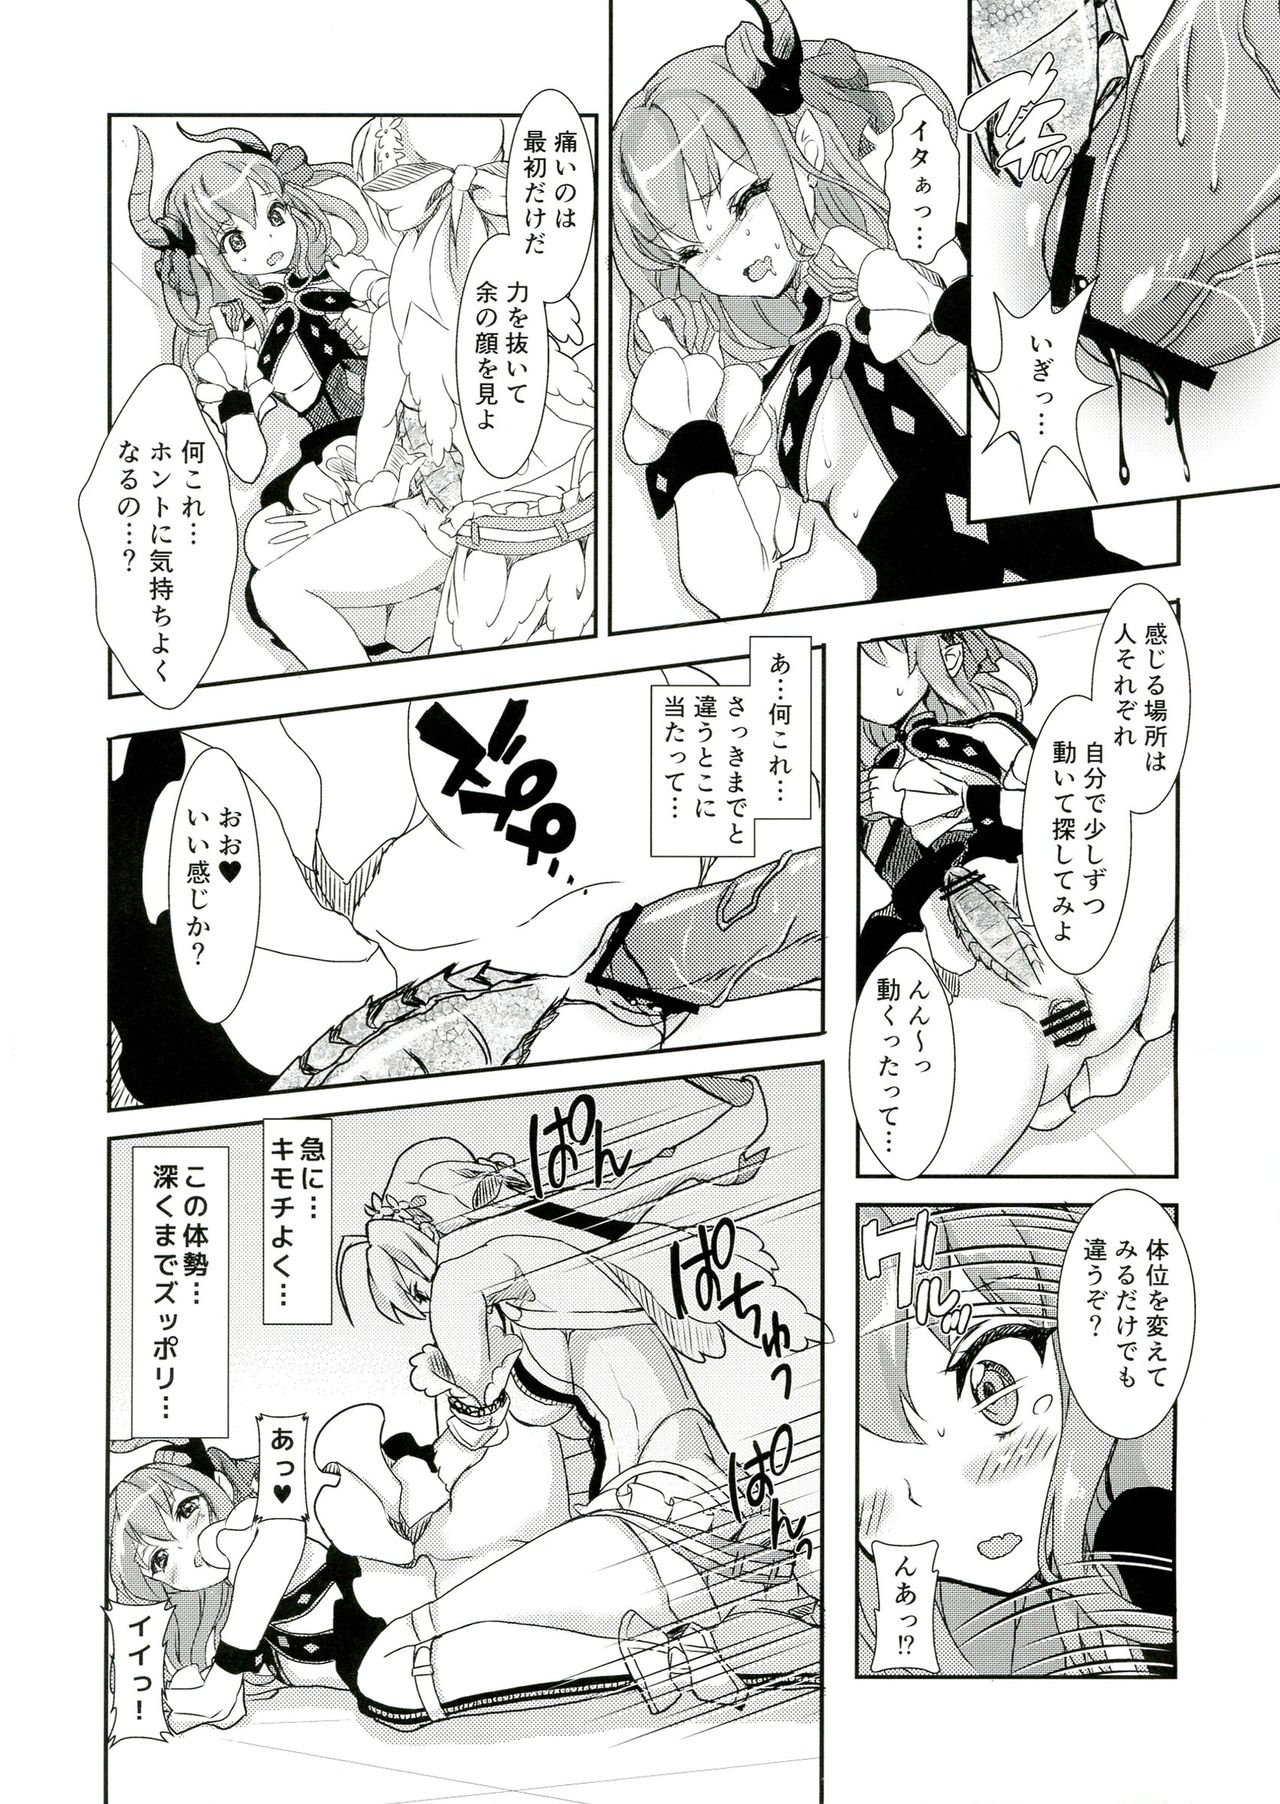 (C84) [Fleur9Pri (Kitahara Eiji)] Koutei no Toubatsu! Dora Musume (Fate/EXTRA CCC) (C84) [ふるるきゅぷり (北原エイジ)] 皇帝の討伐!どら娘 (Fate／EXTRA CCC)